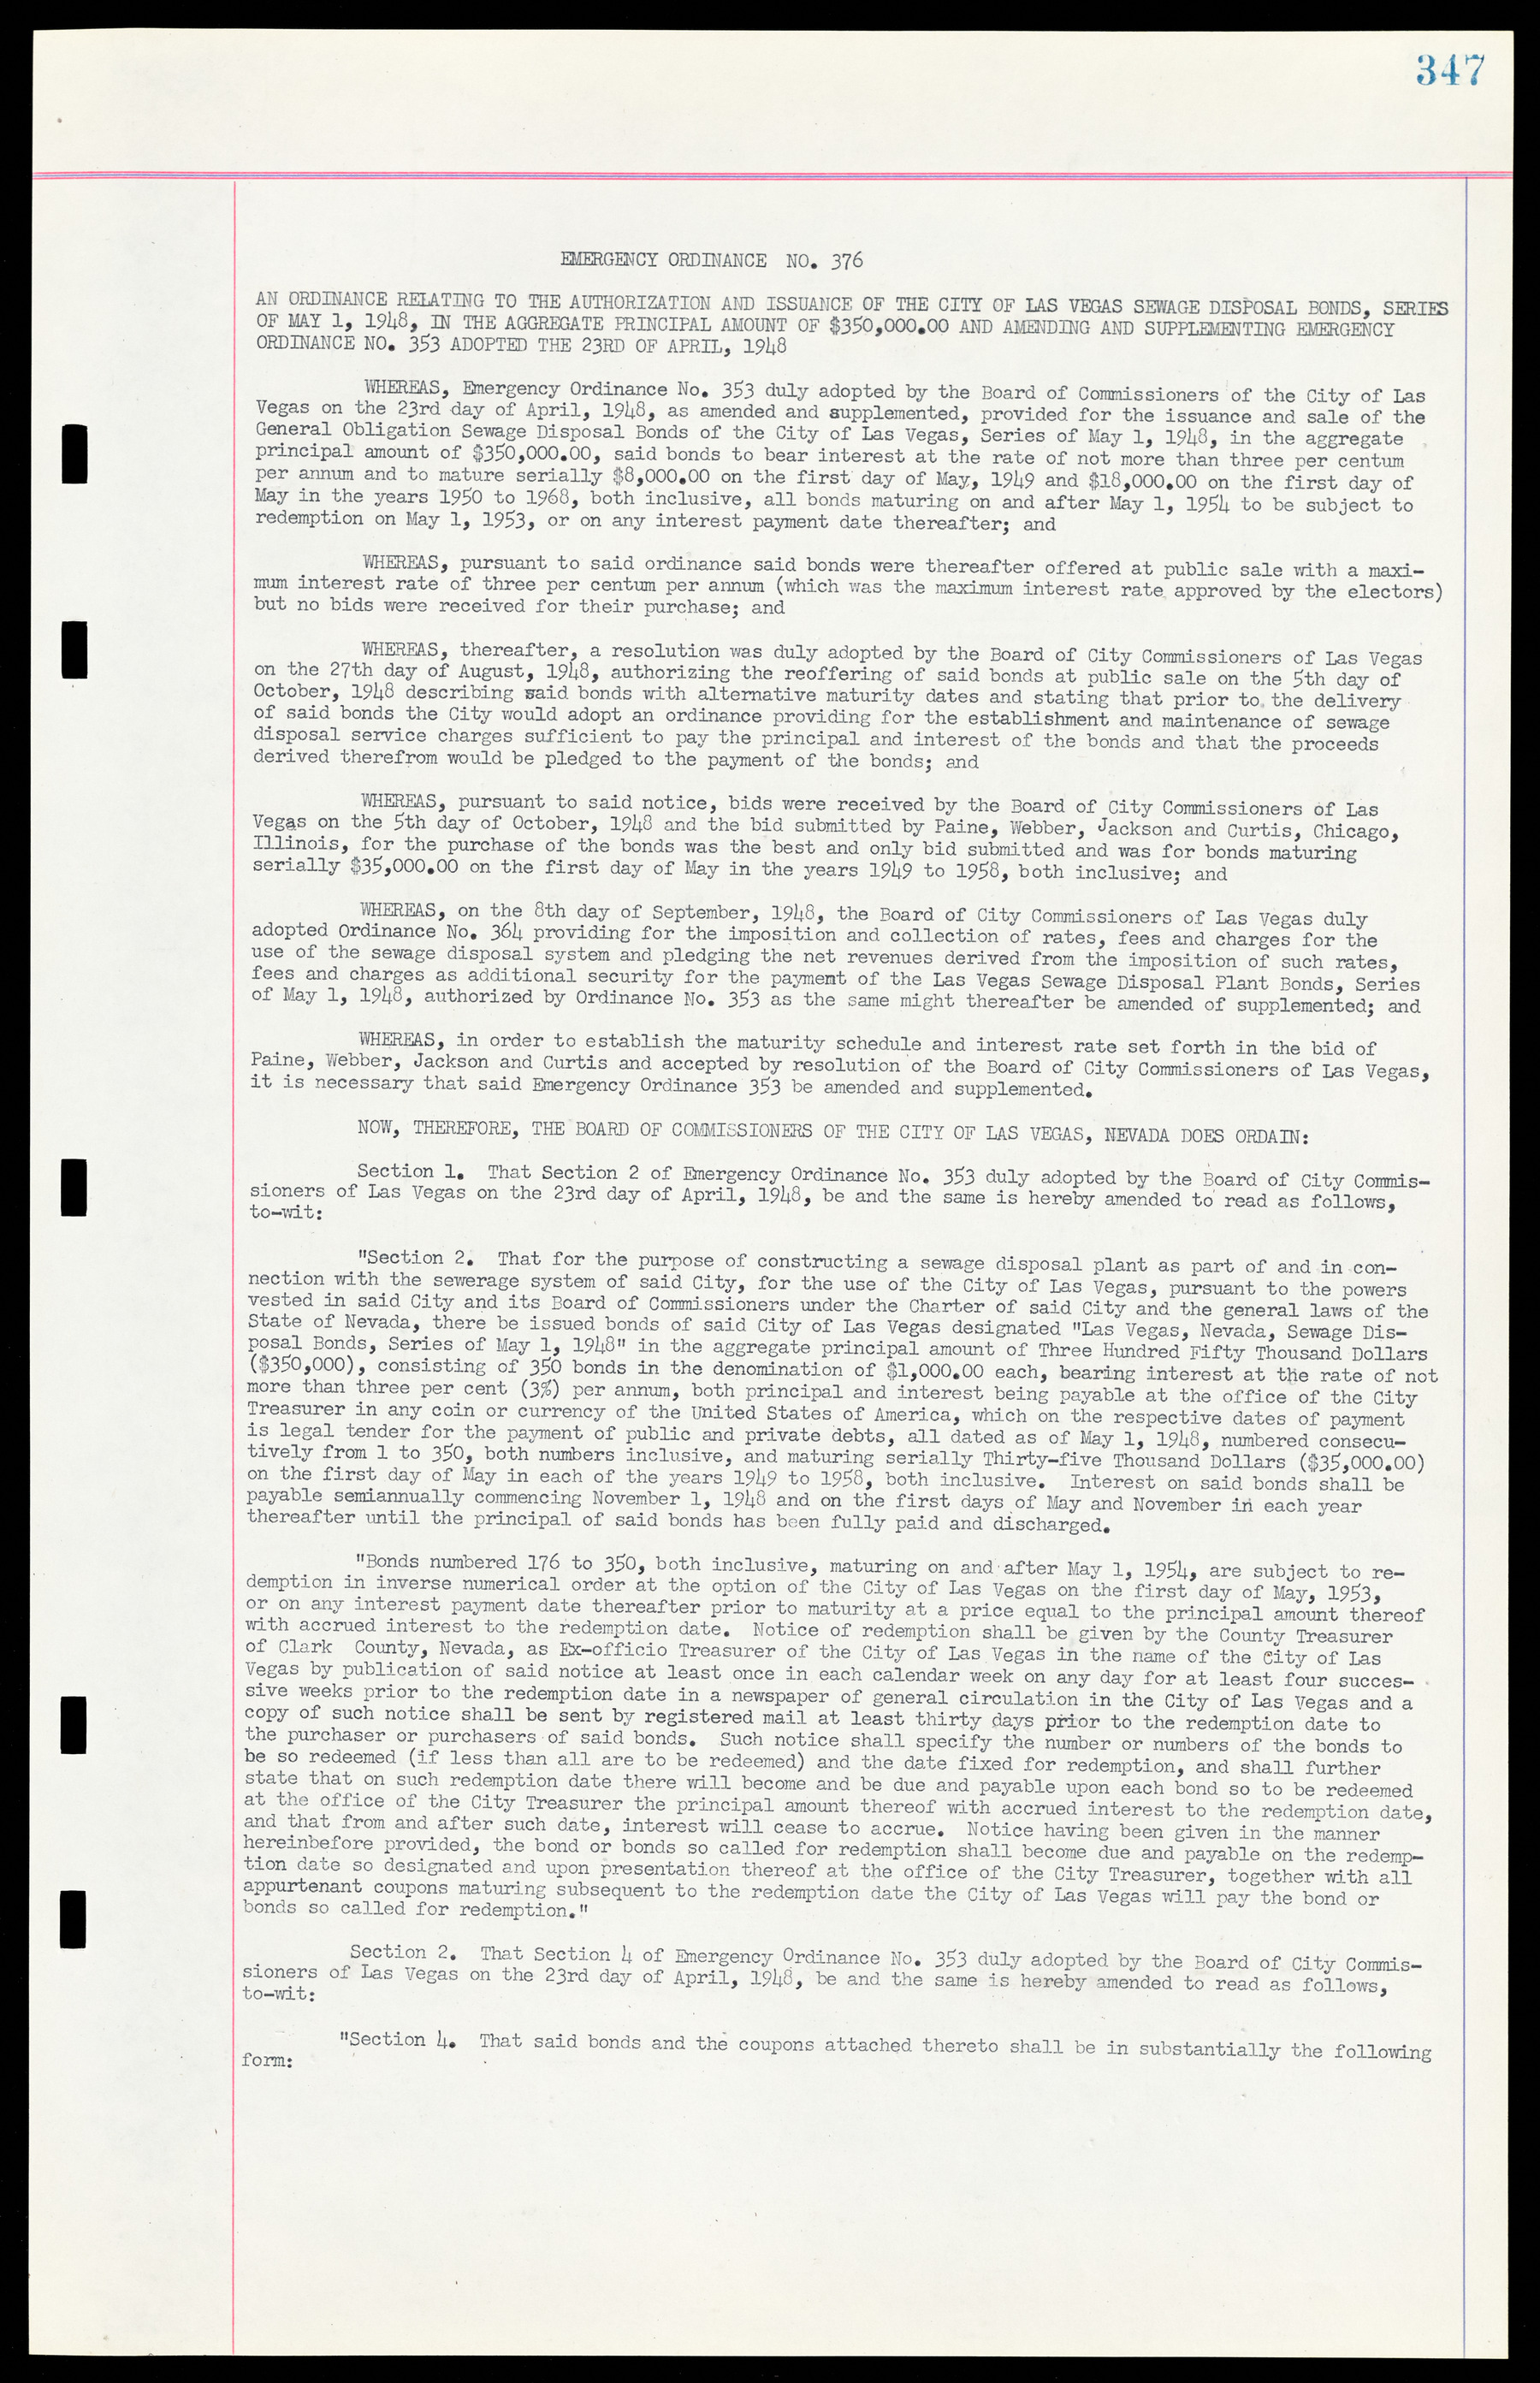 Las Vegas City Ordinances, March 31, 1933 to October 25, 1950, lvc000014-376